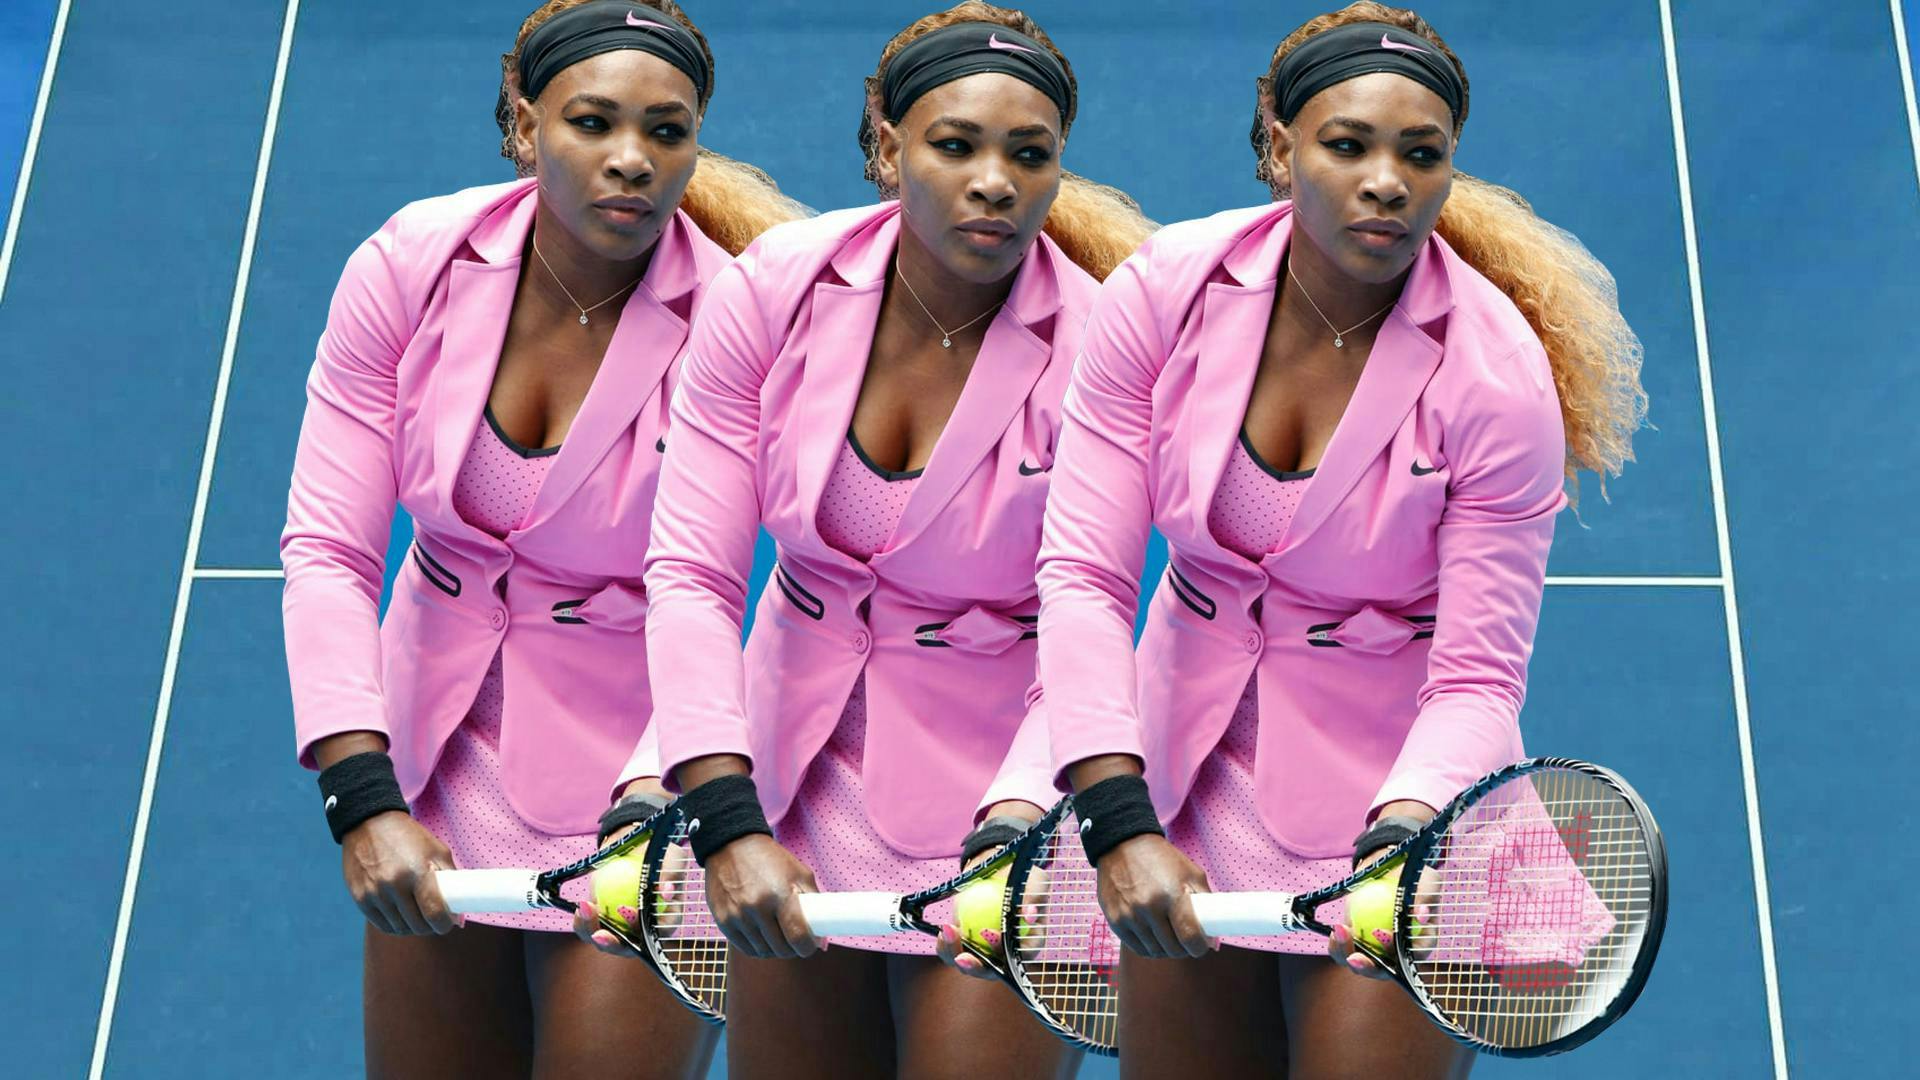 person human tennis racket racket tennis sport sports clothing apparel